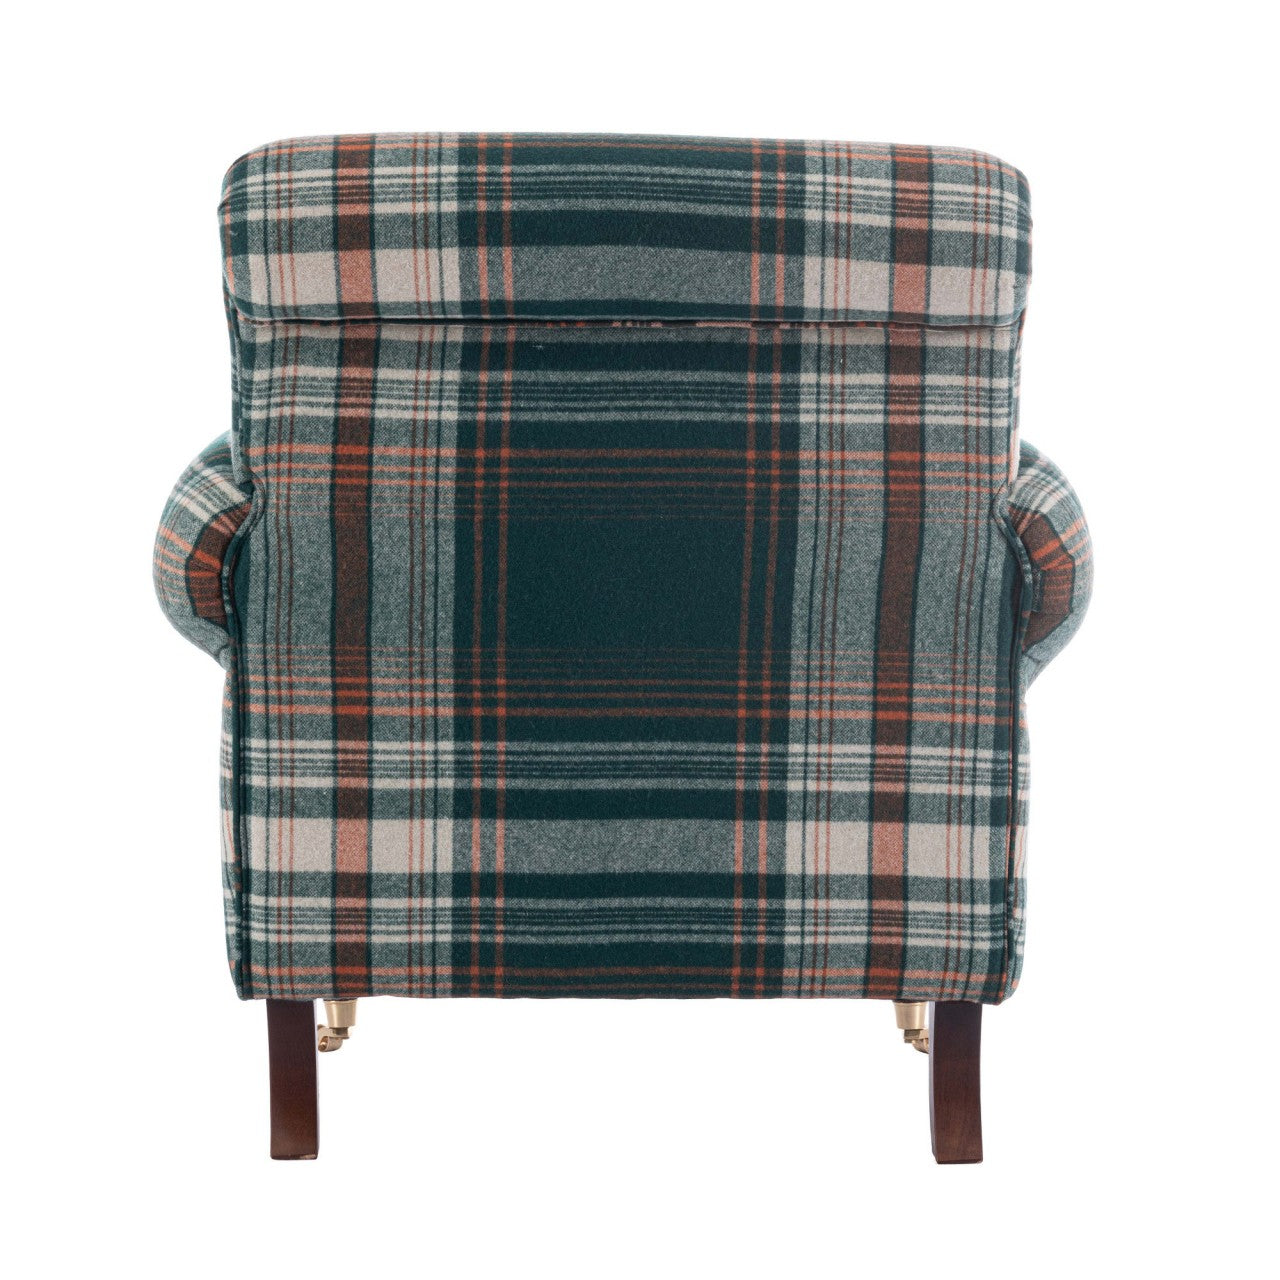 KINGSTON CHAIR - MONTEREY PLAID Green Woven Fabric_Furniture_Mindthegap